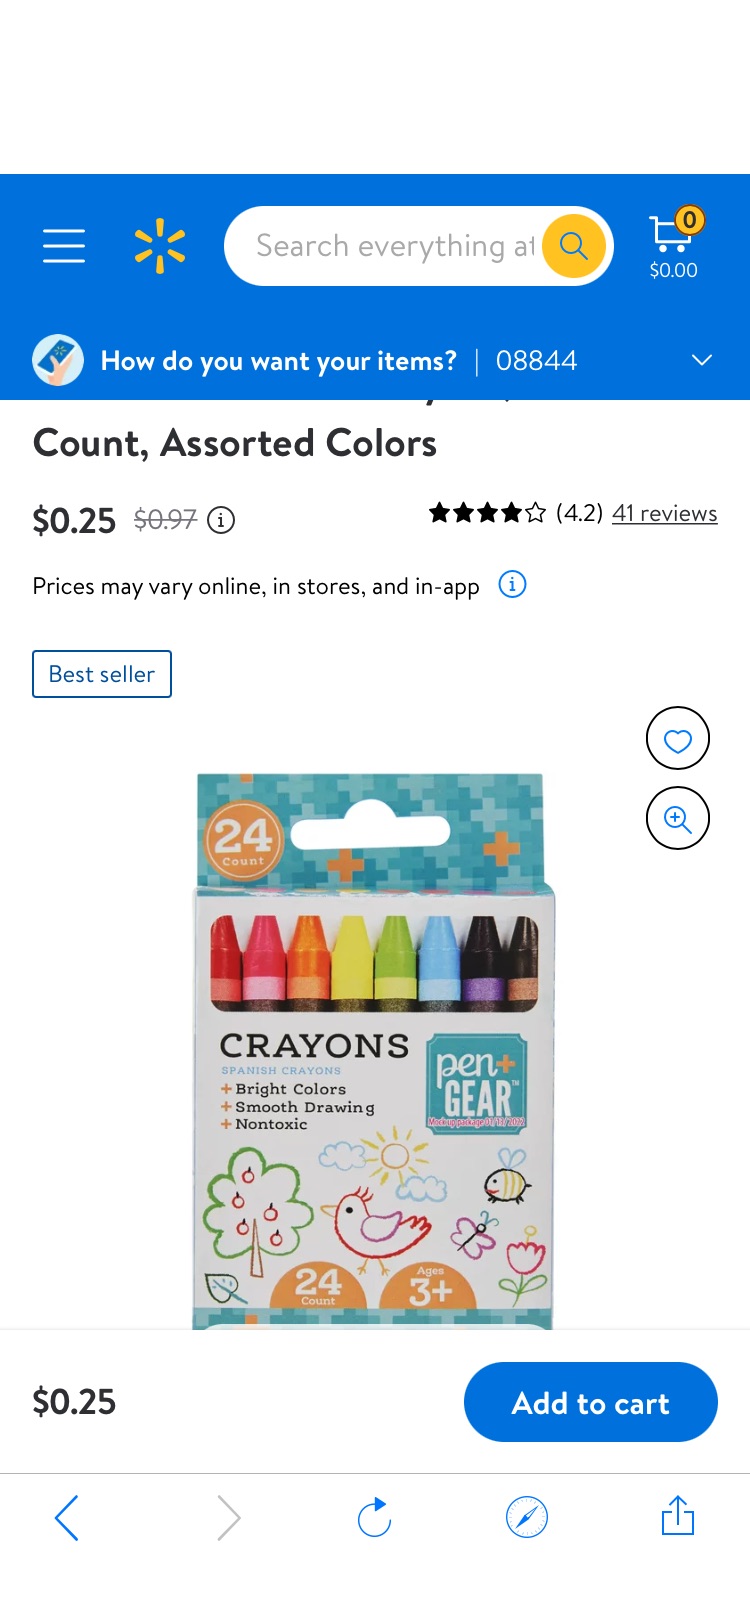 Pen + Gear Classic Crayons, 24 Piece Count, Assorted Colors - Walmart.com